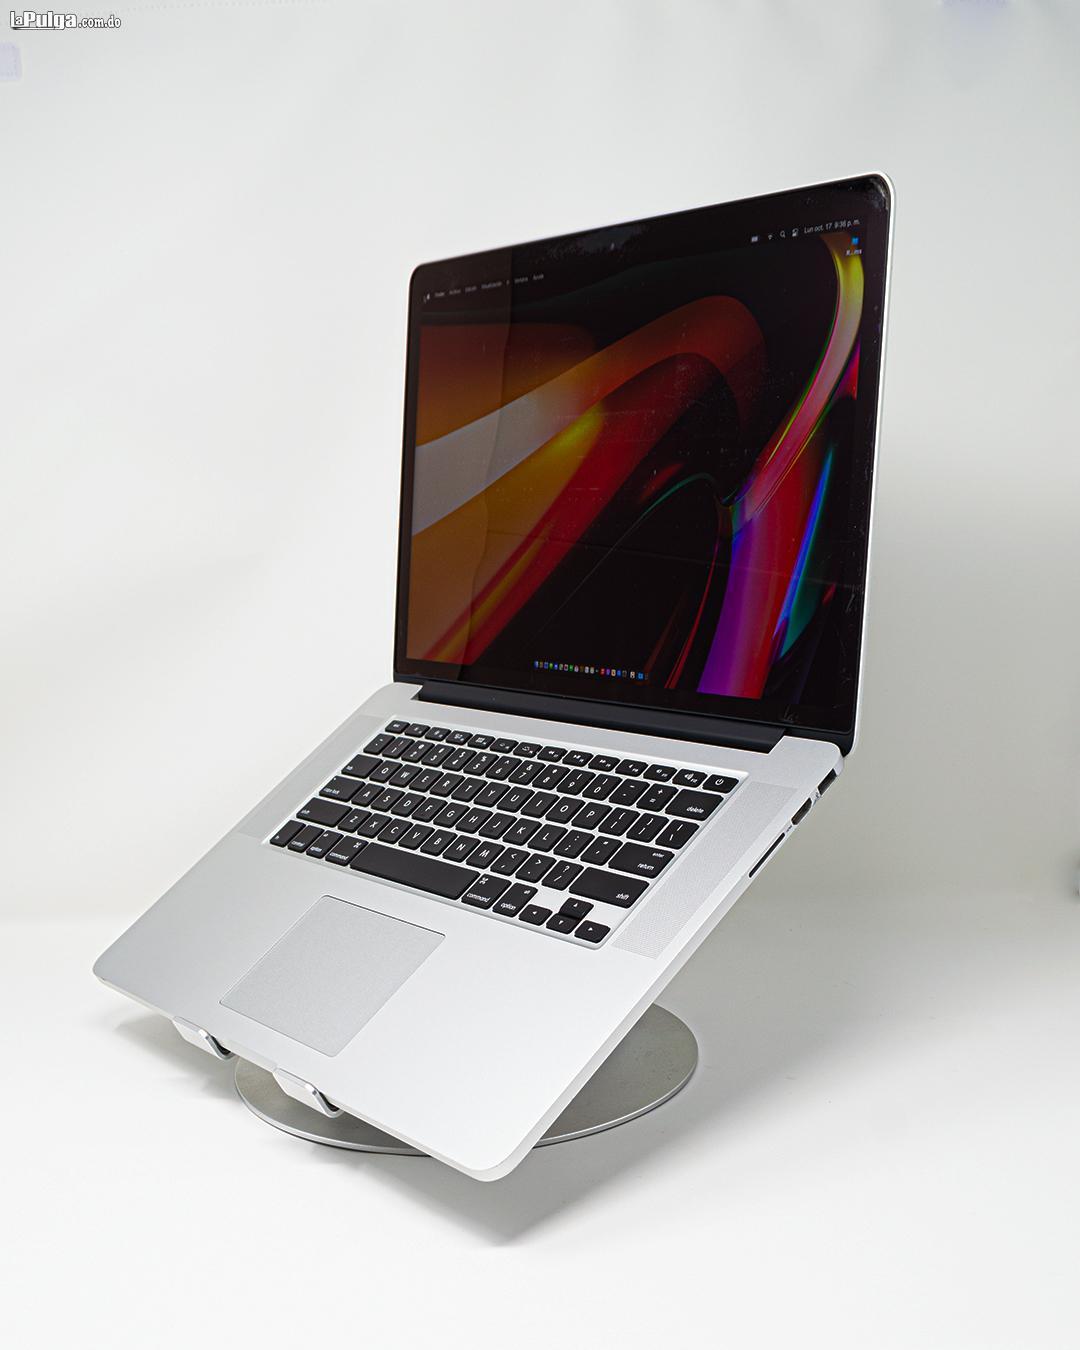 MacBook Pro 15 pulgs 2014 Doble Tarjeta Gráfica Foto 7130223-2.jpg